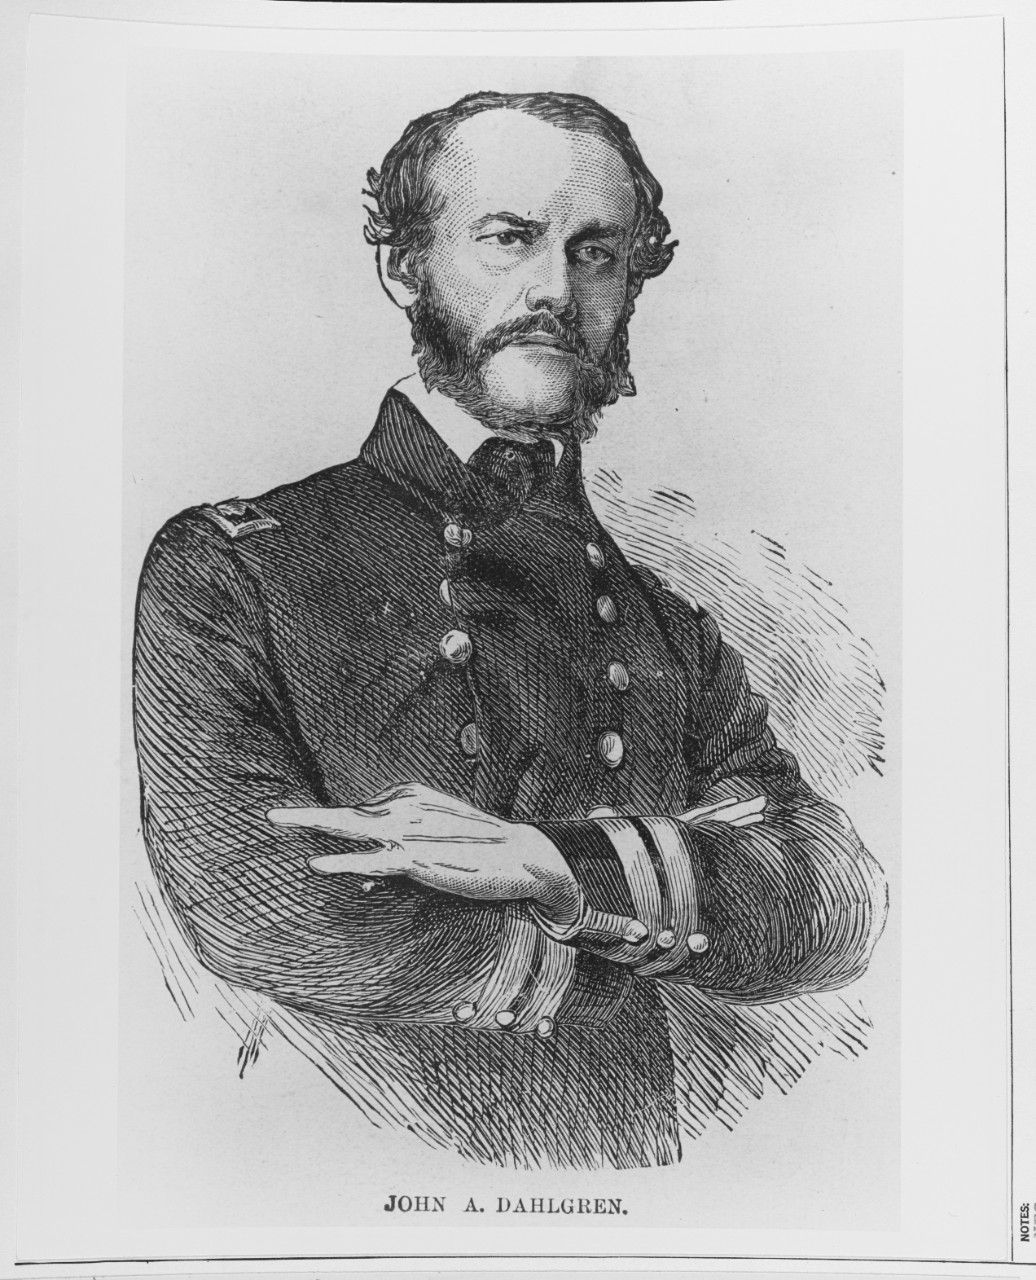 Commander John A. Dahlgren, USN